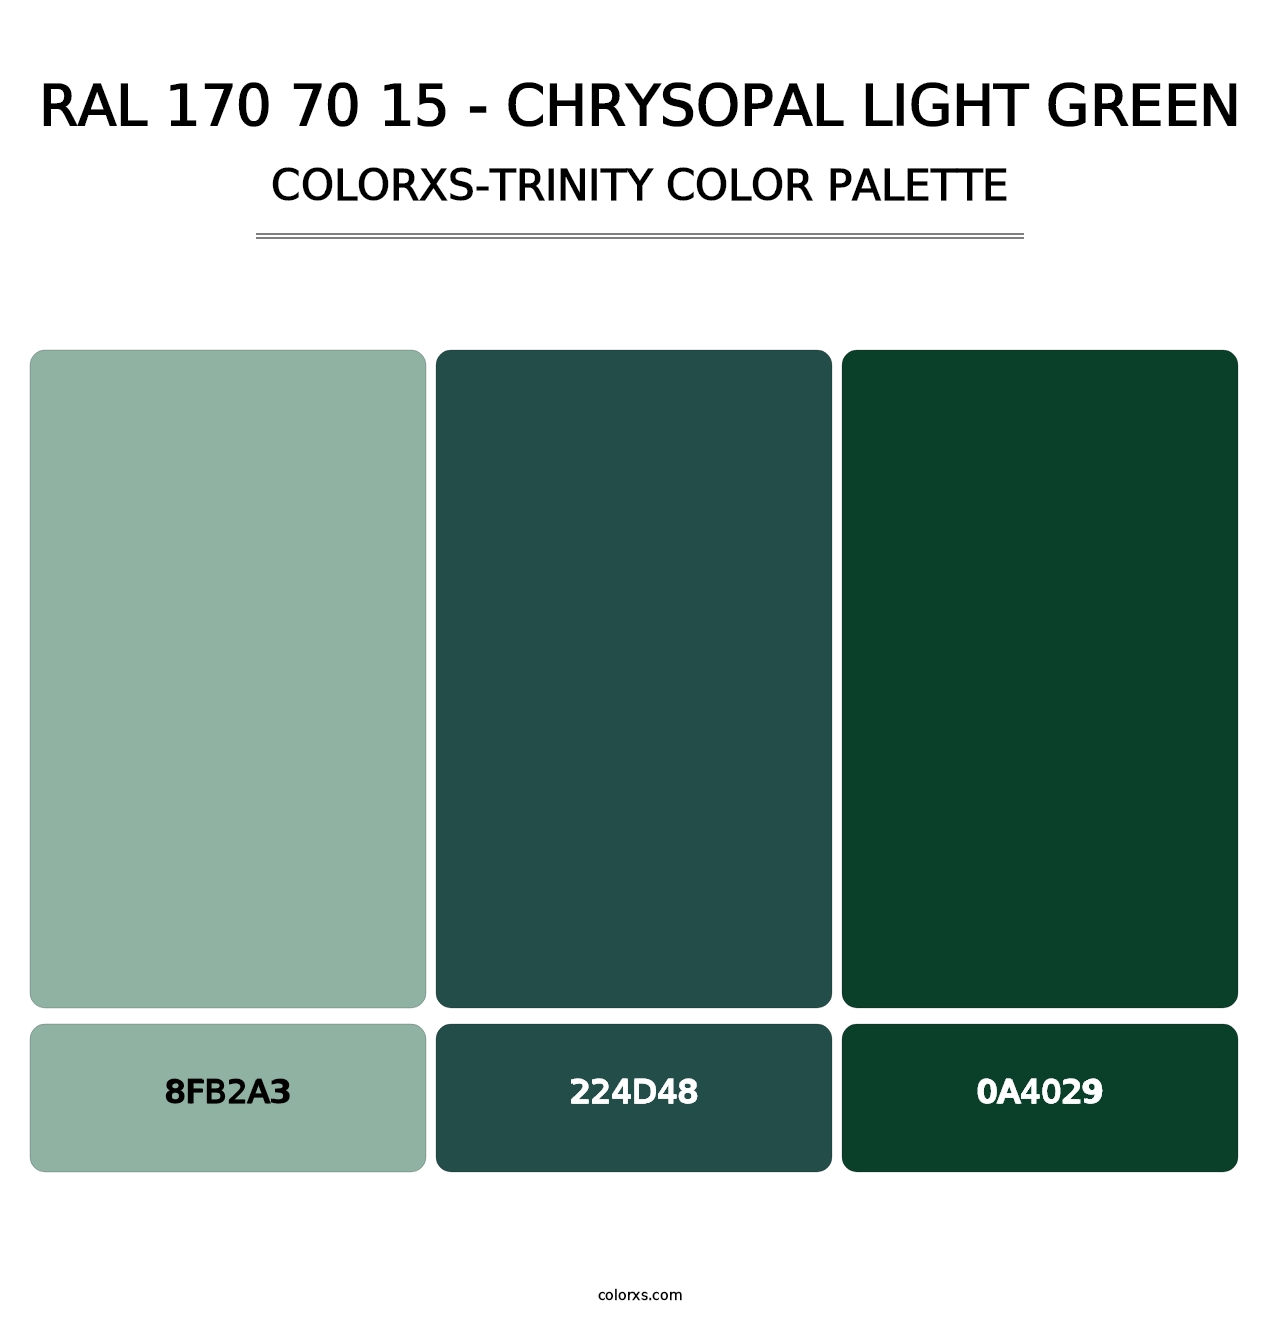 RAL 170 70 15 - Chrysopal Light Green - Colorxs Trinity Palette